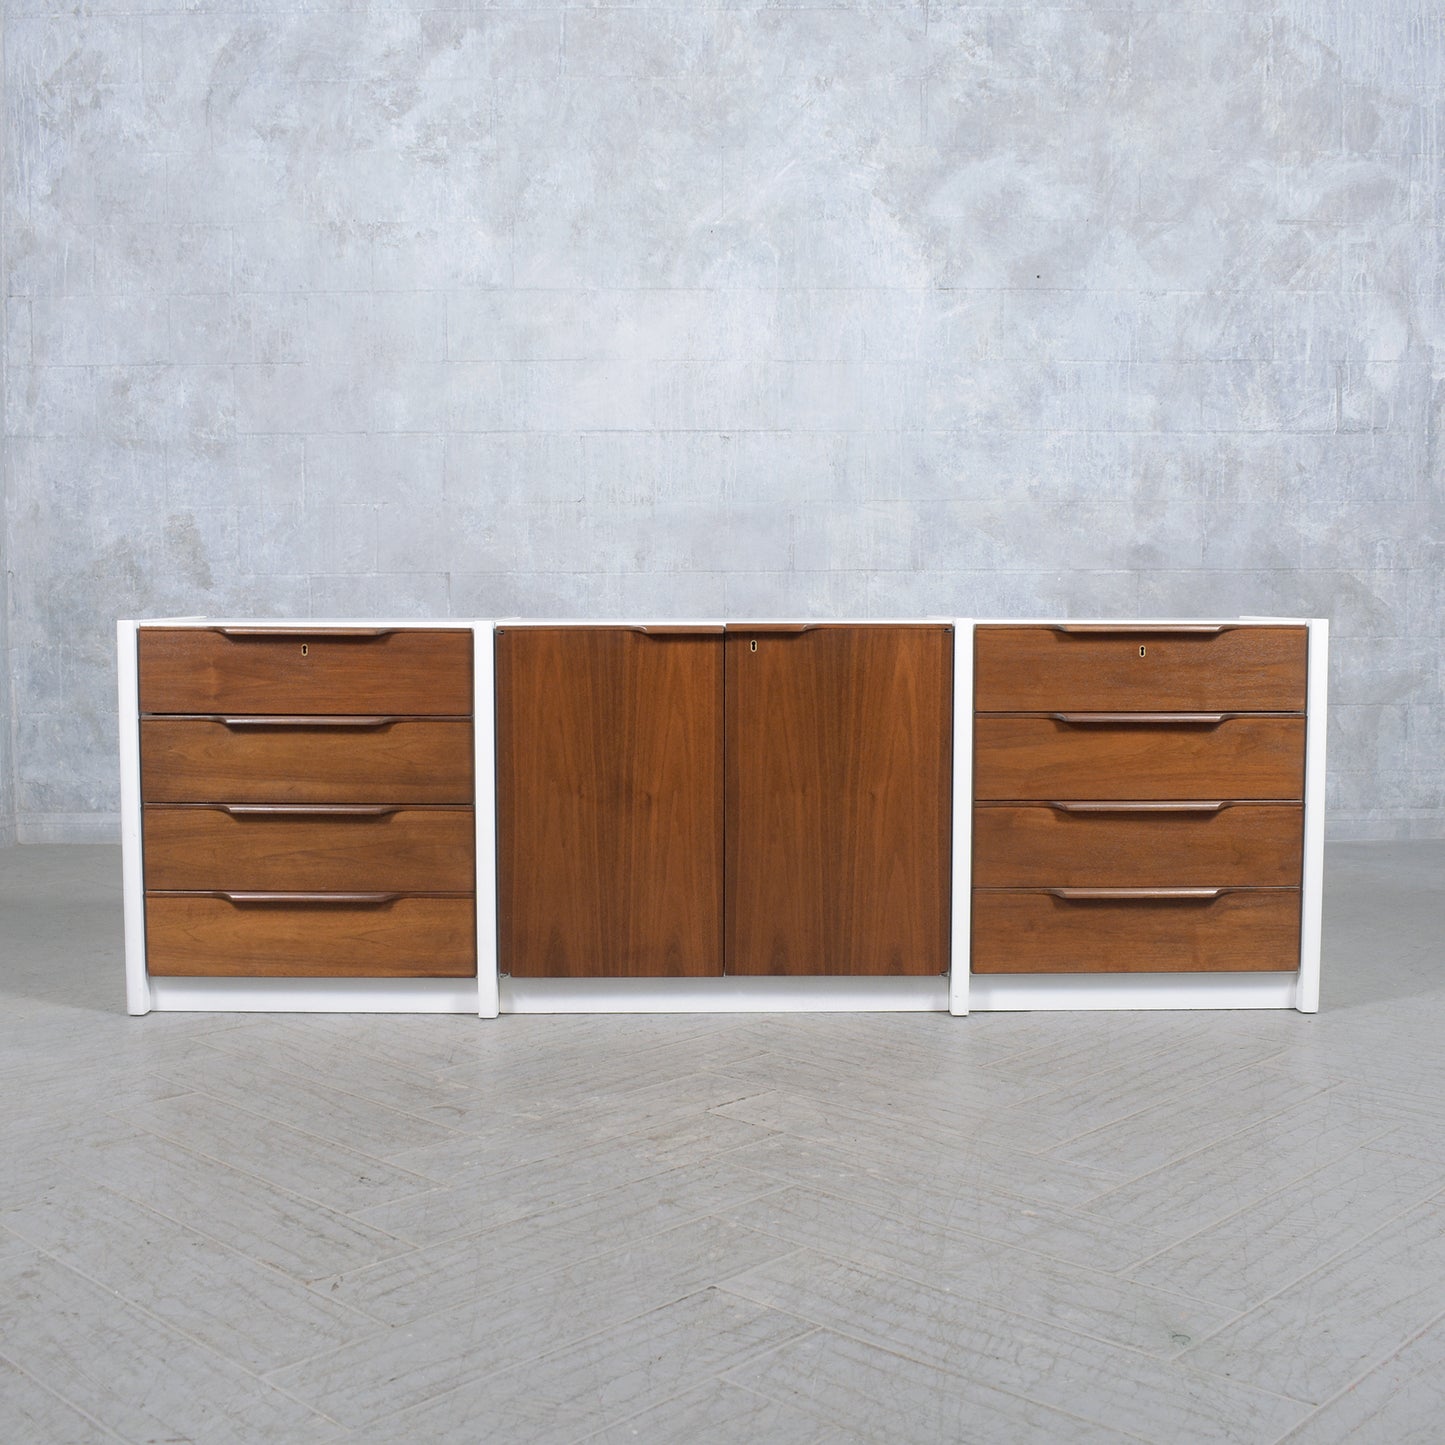 1960s Danish Executive Cabinet: Timeless Walnut Craftsmanship & Design